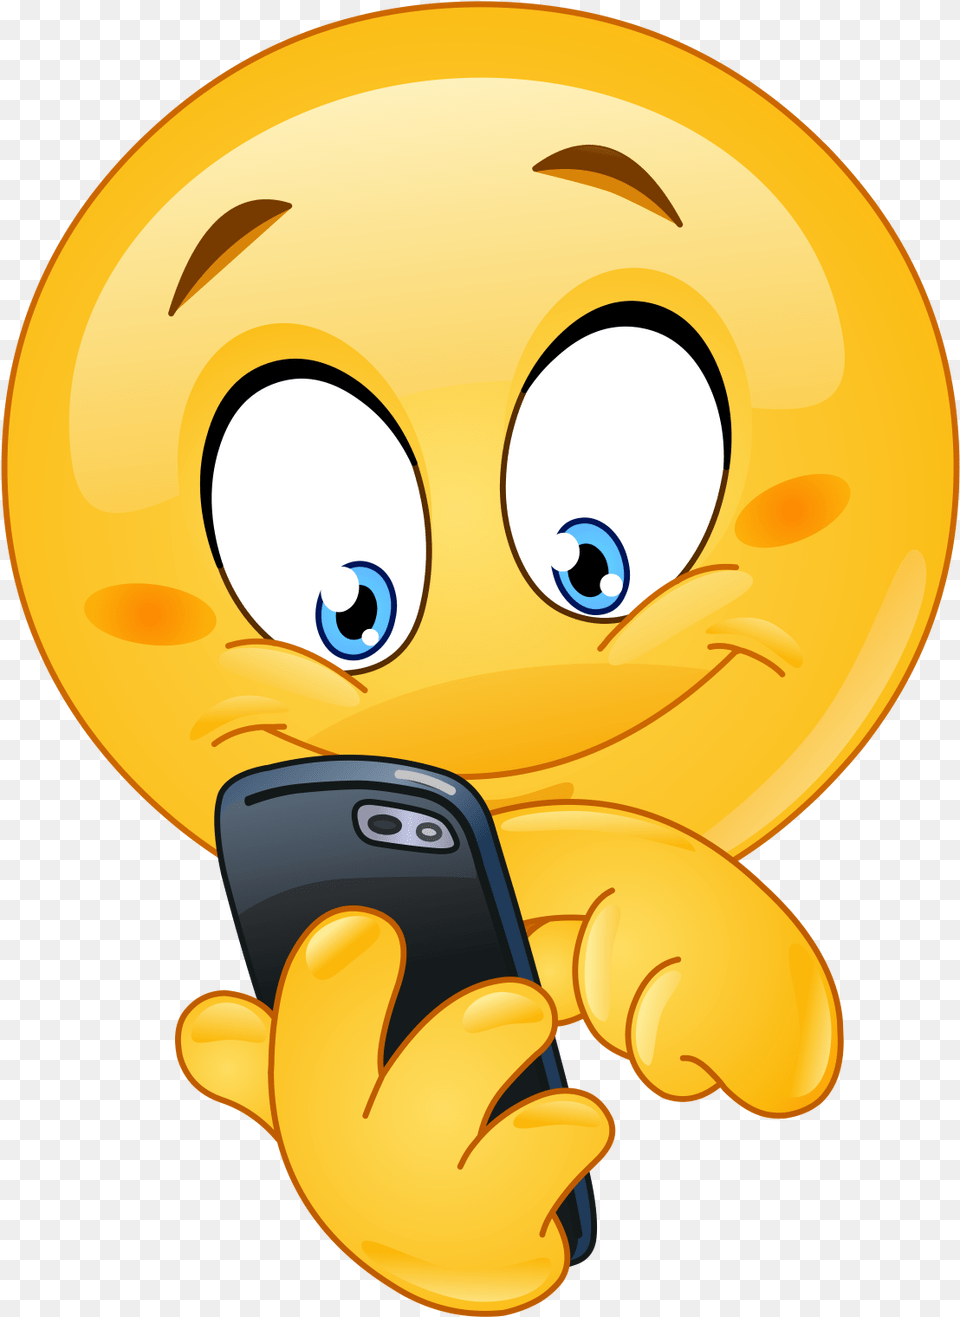 Cell Phone Emoji Decal Emoji Using Phone, Electronics, Mobile Phone Free Png Download